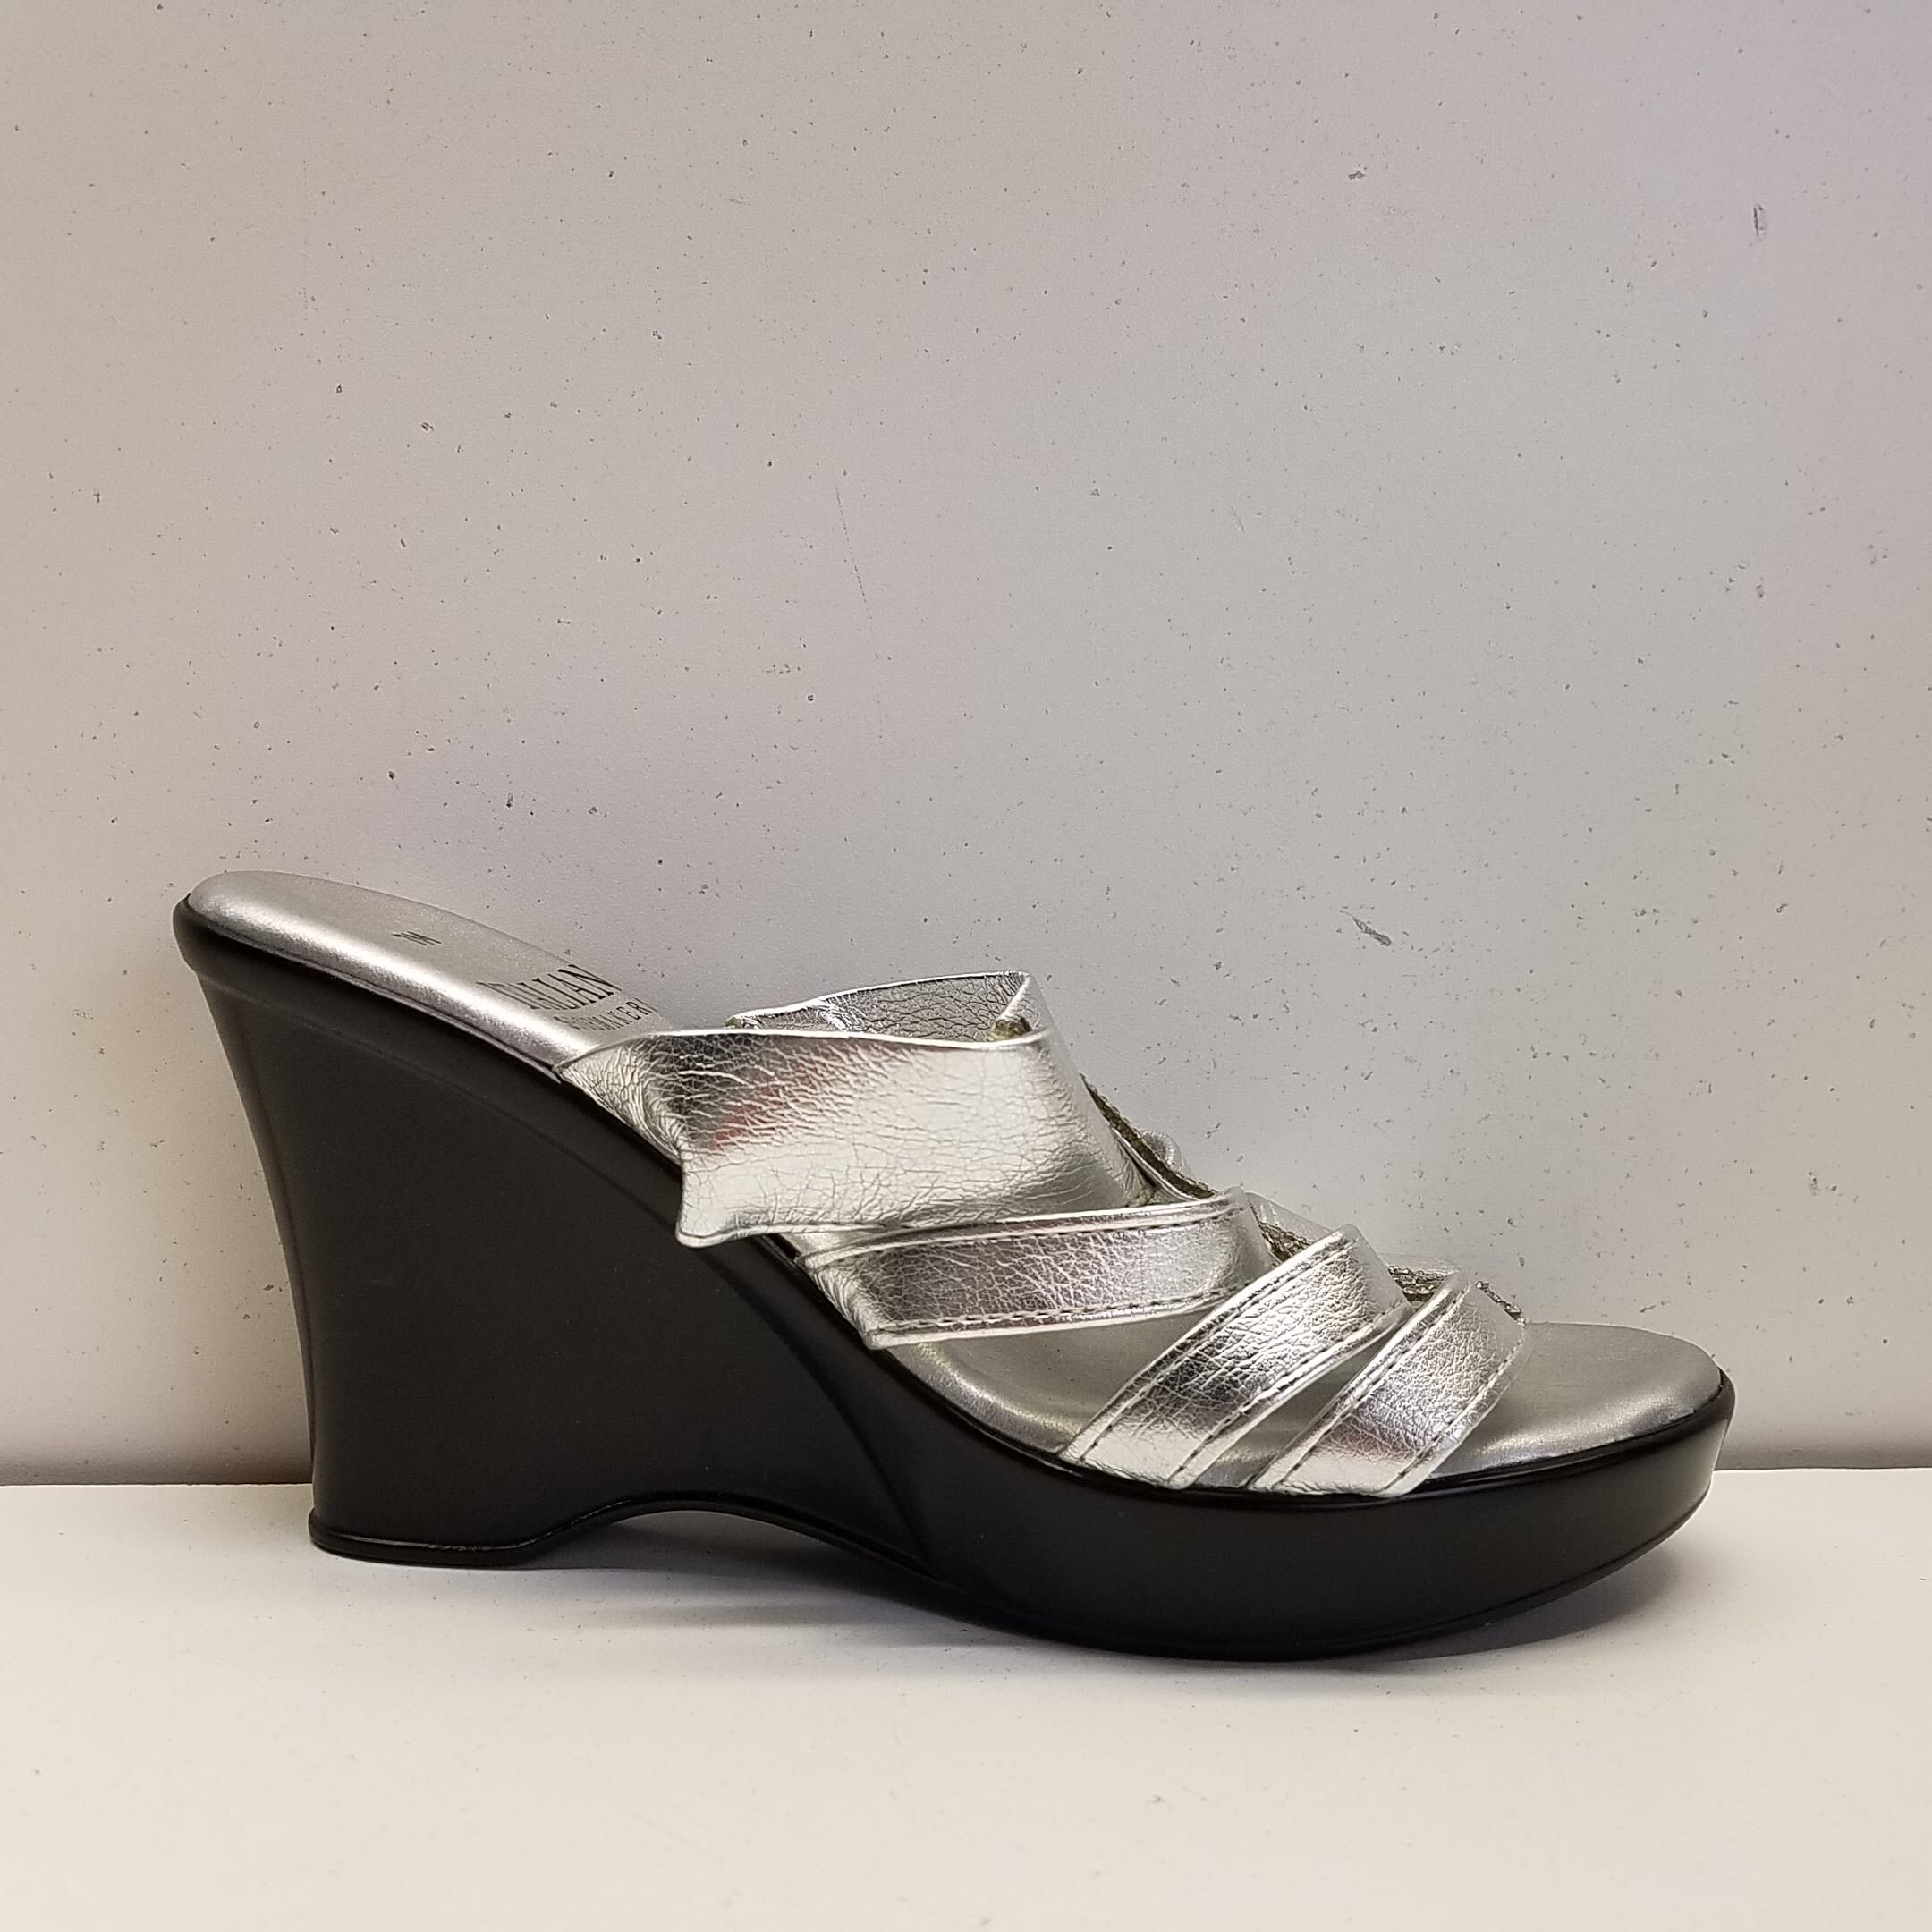 Le Silla shoes for women | Heels, Next shoes, Sandals heels